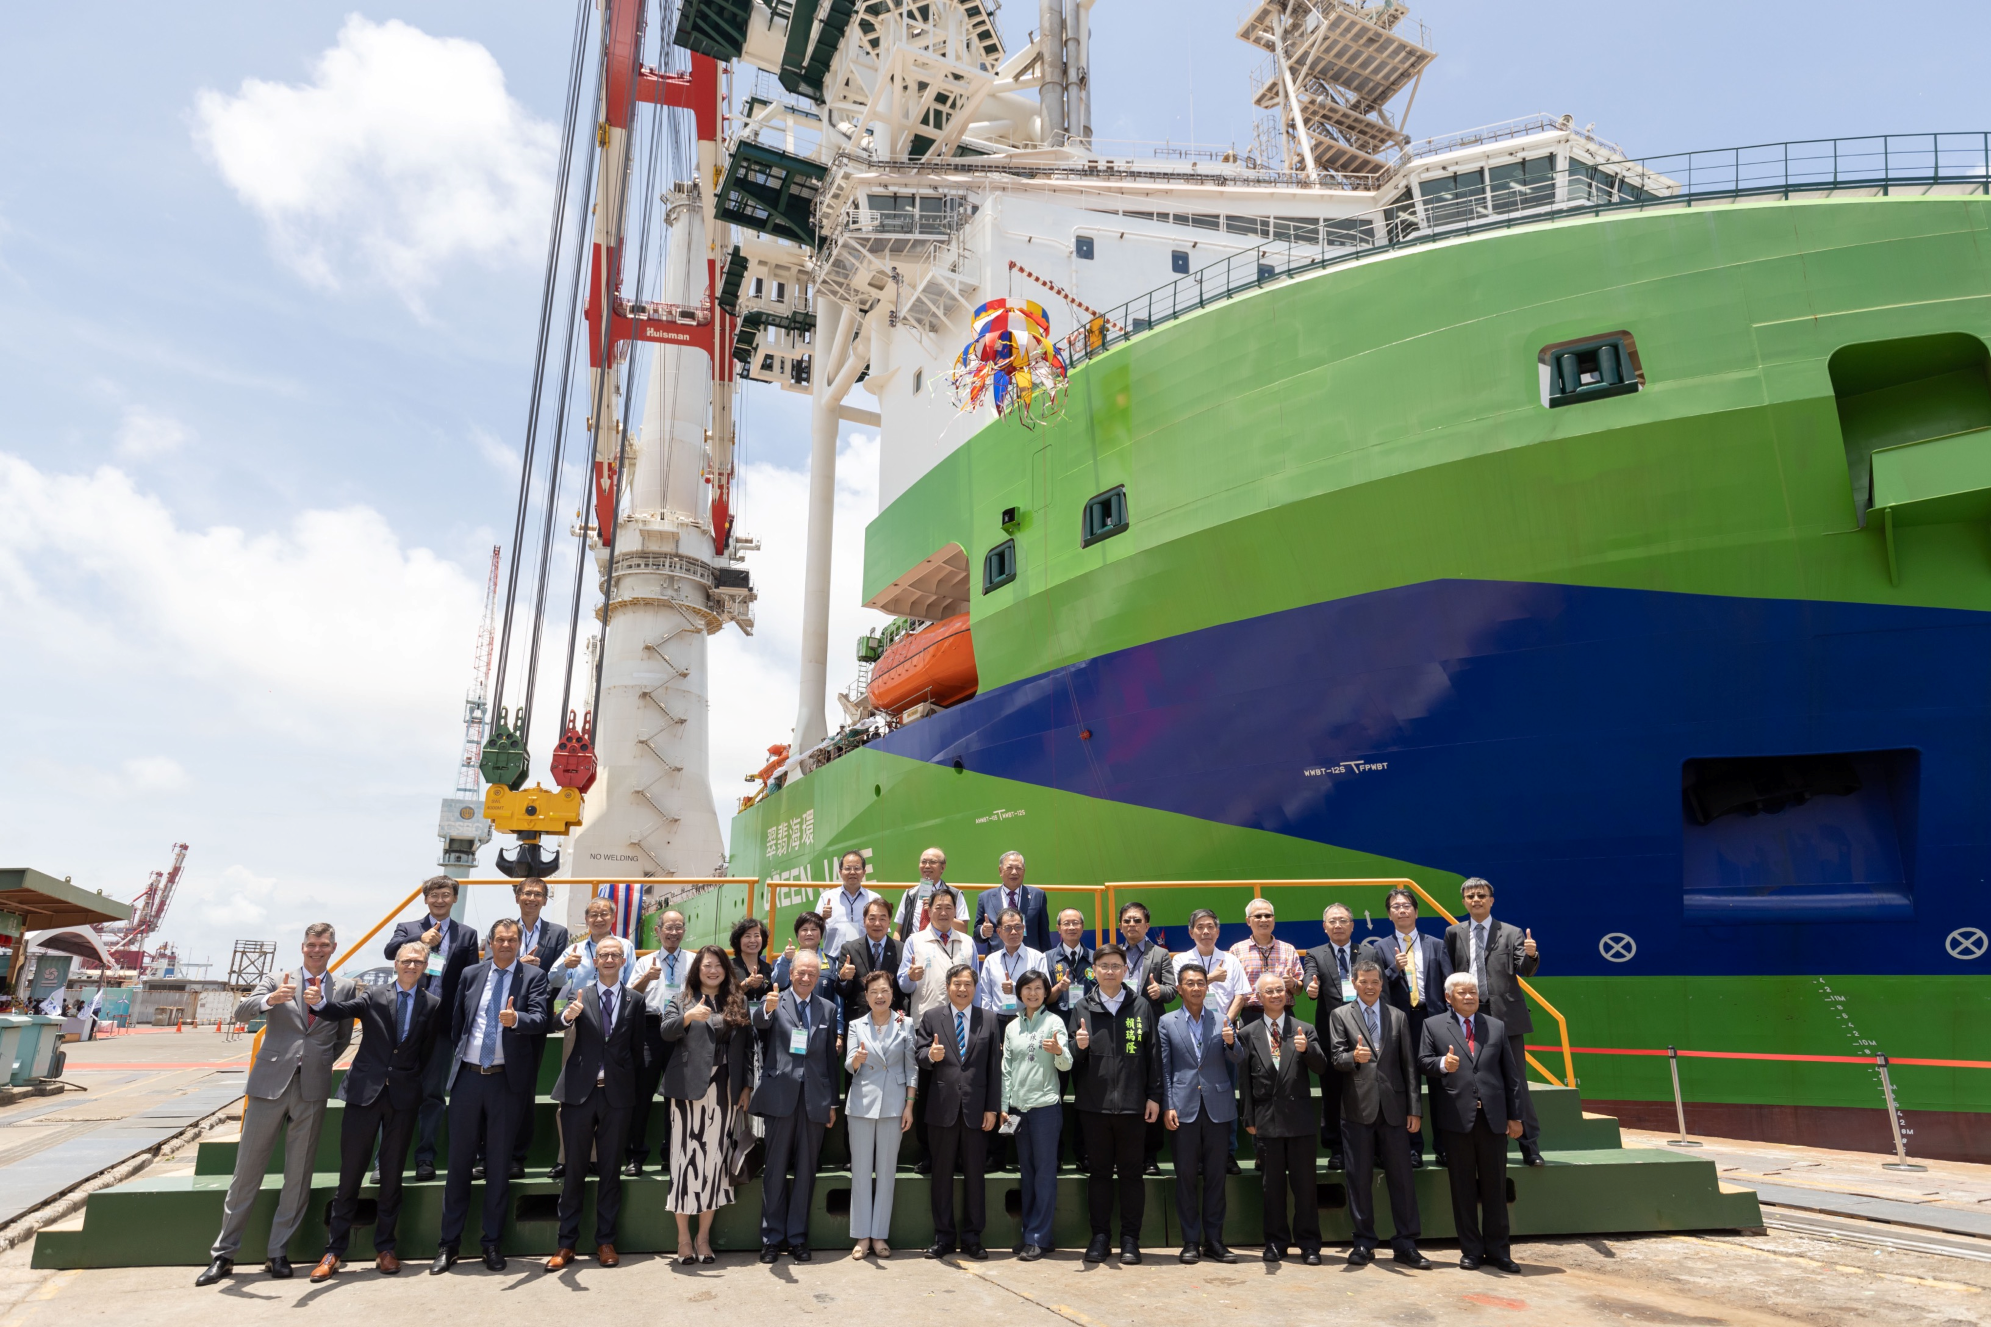 Revolutionary offshore installation vessel ‘Green Jade’ joins the fleet, a landmark moment for Taiwan’s thriving offshore wind market